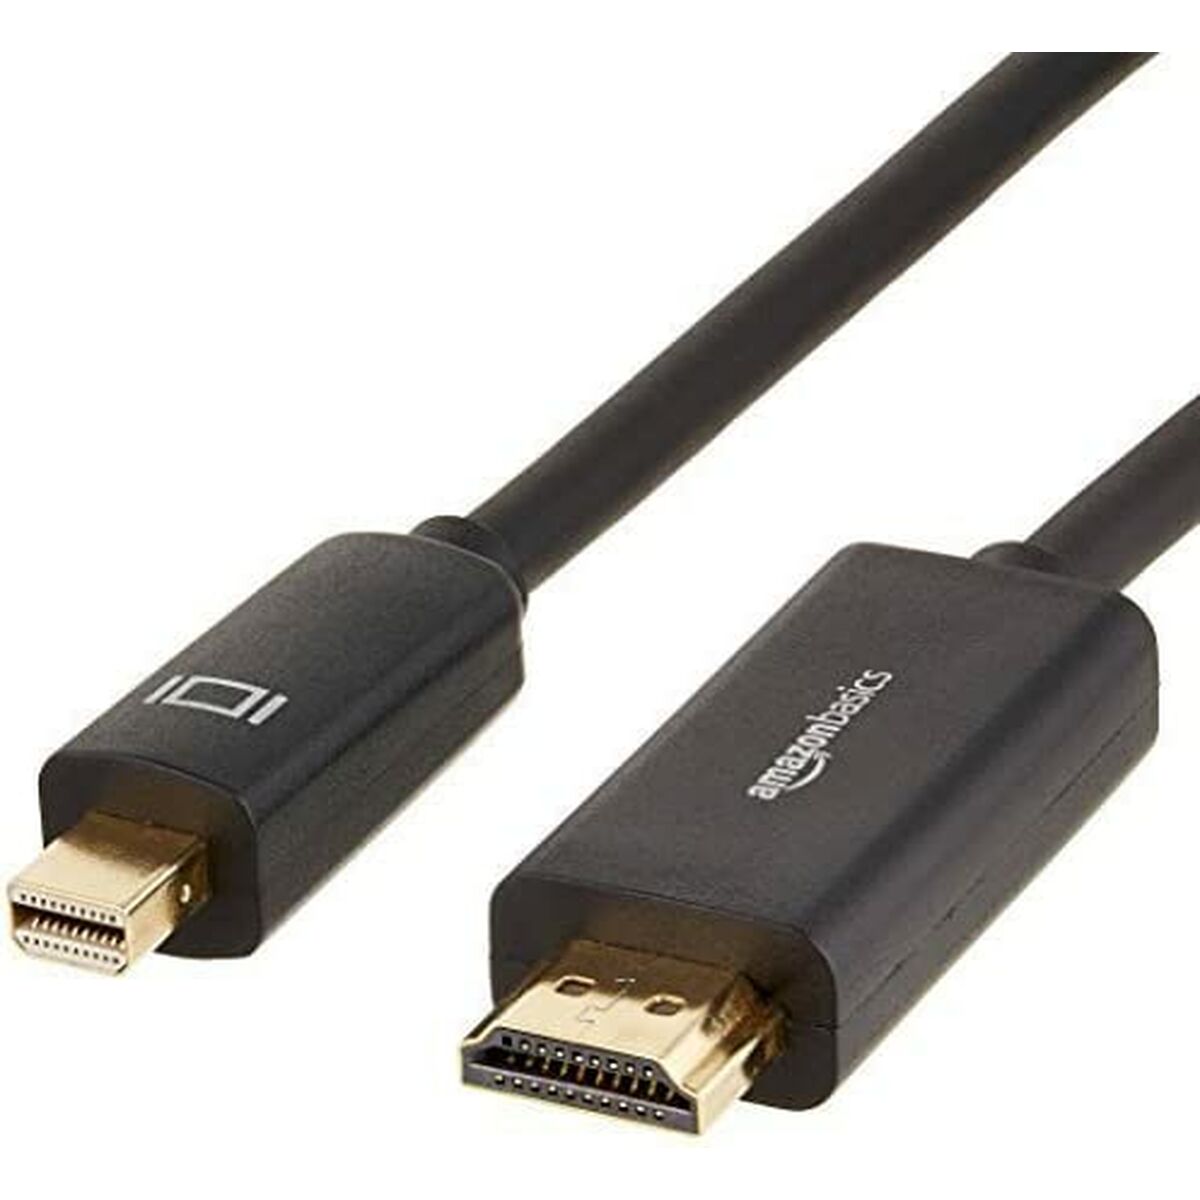 DisplayPort to HDMI Cable Amazon Basics AZDPHD03 0,9 m Black (Refurbished A)